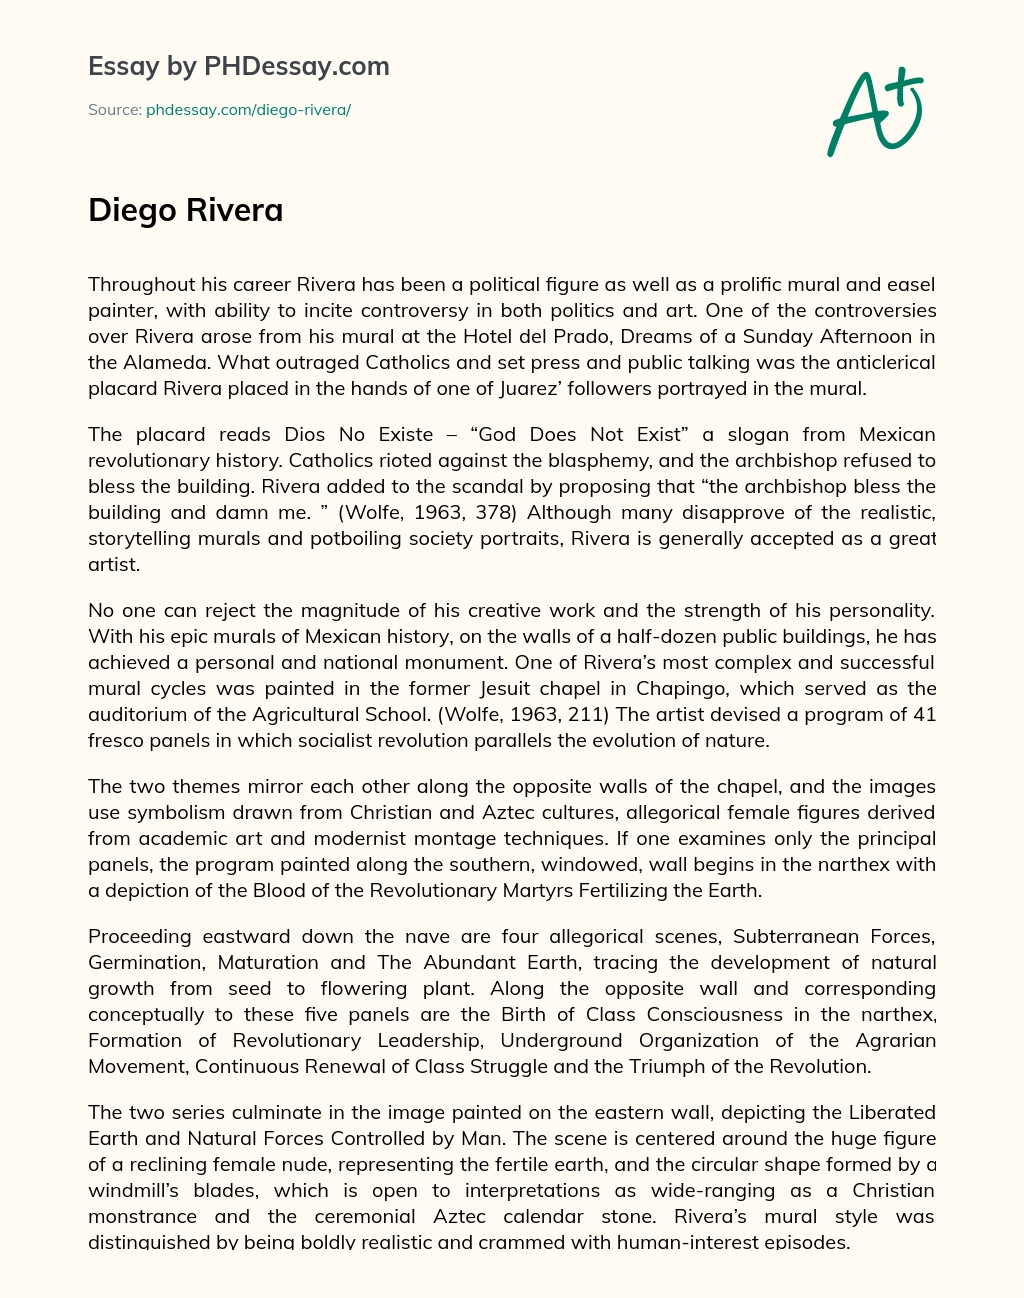 Rivera: A Controversial Political and Artistic Figure essay